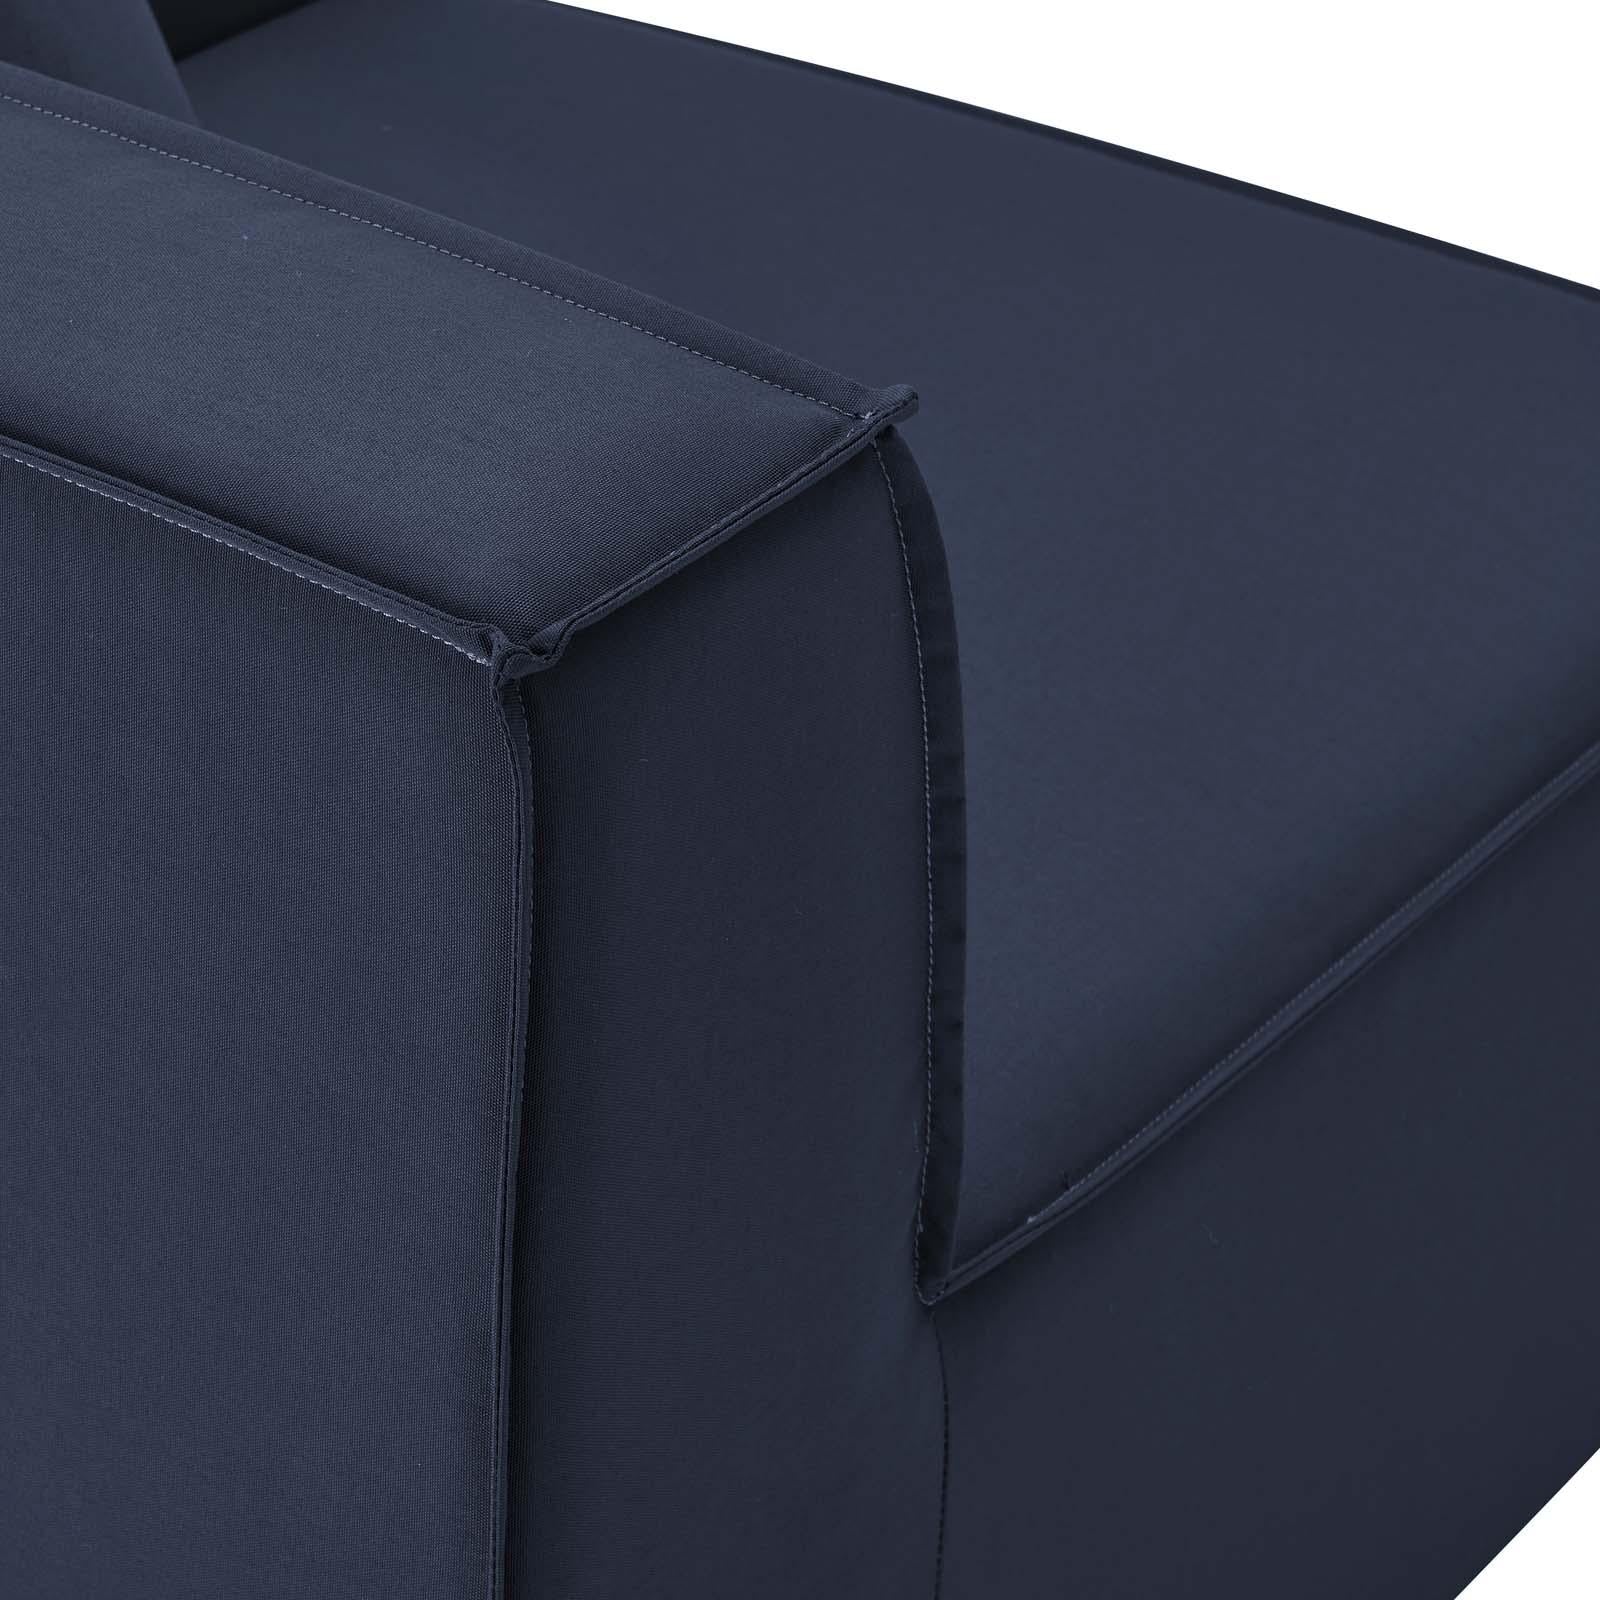 Modway Furniture Modern Saybrook Outdoor Patio Upholstered 6-Piece Sectional Sofa - EEI-4383